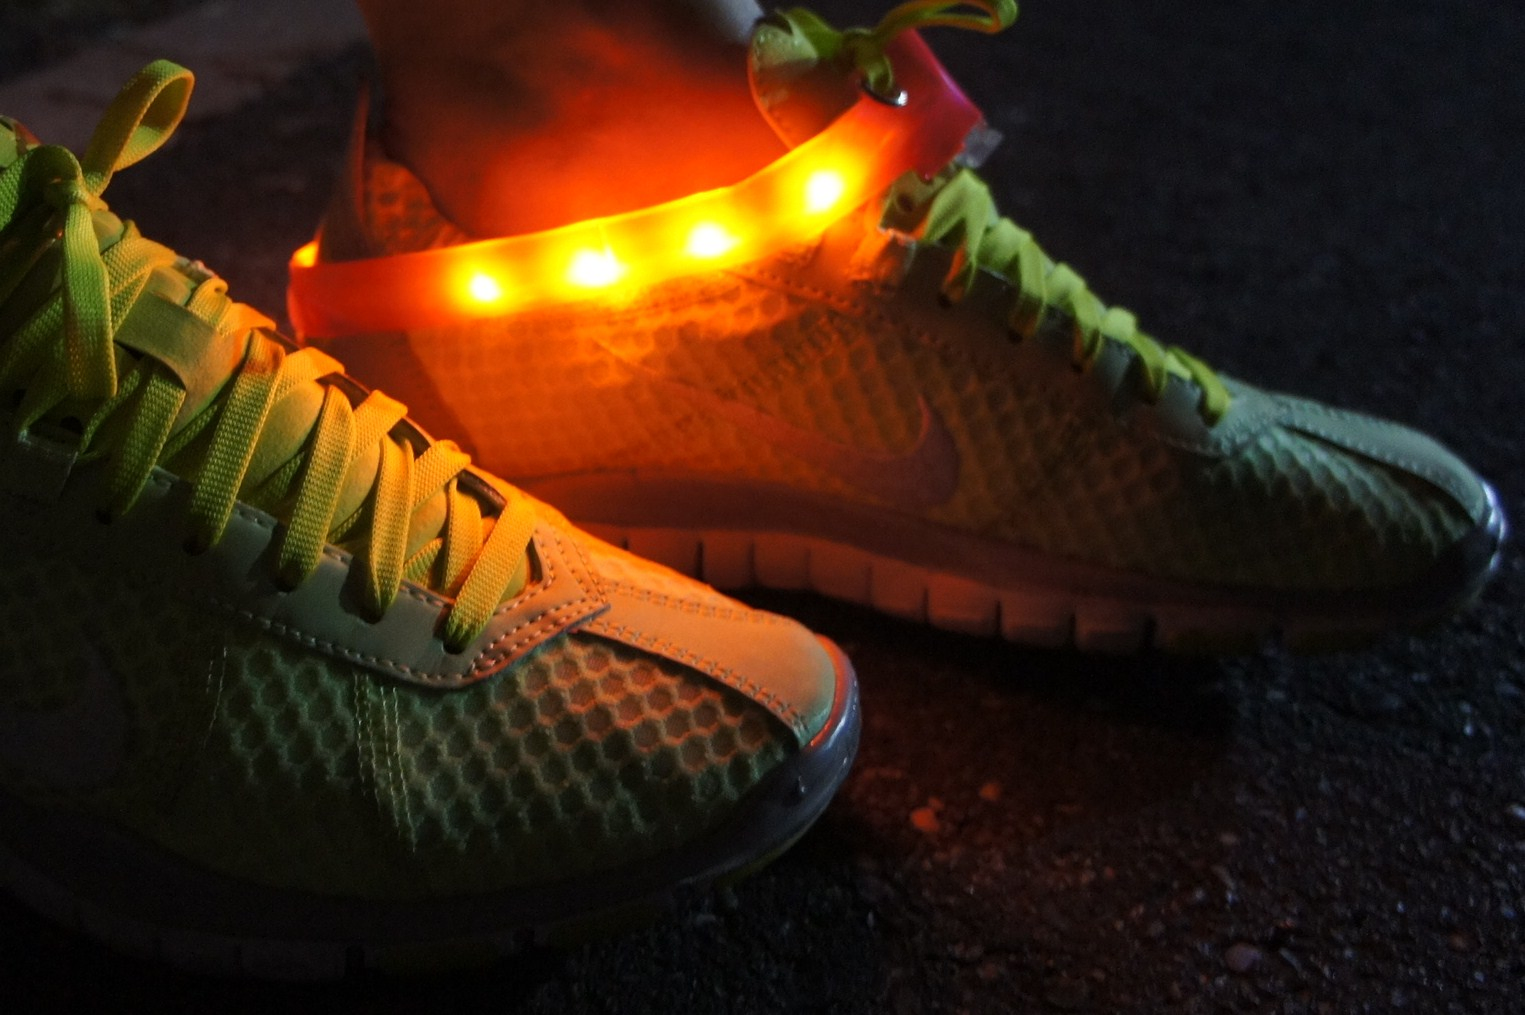 LED 安全警示防水鞋環